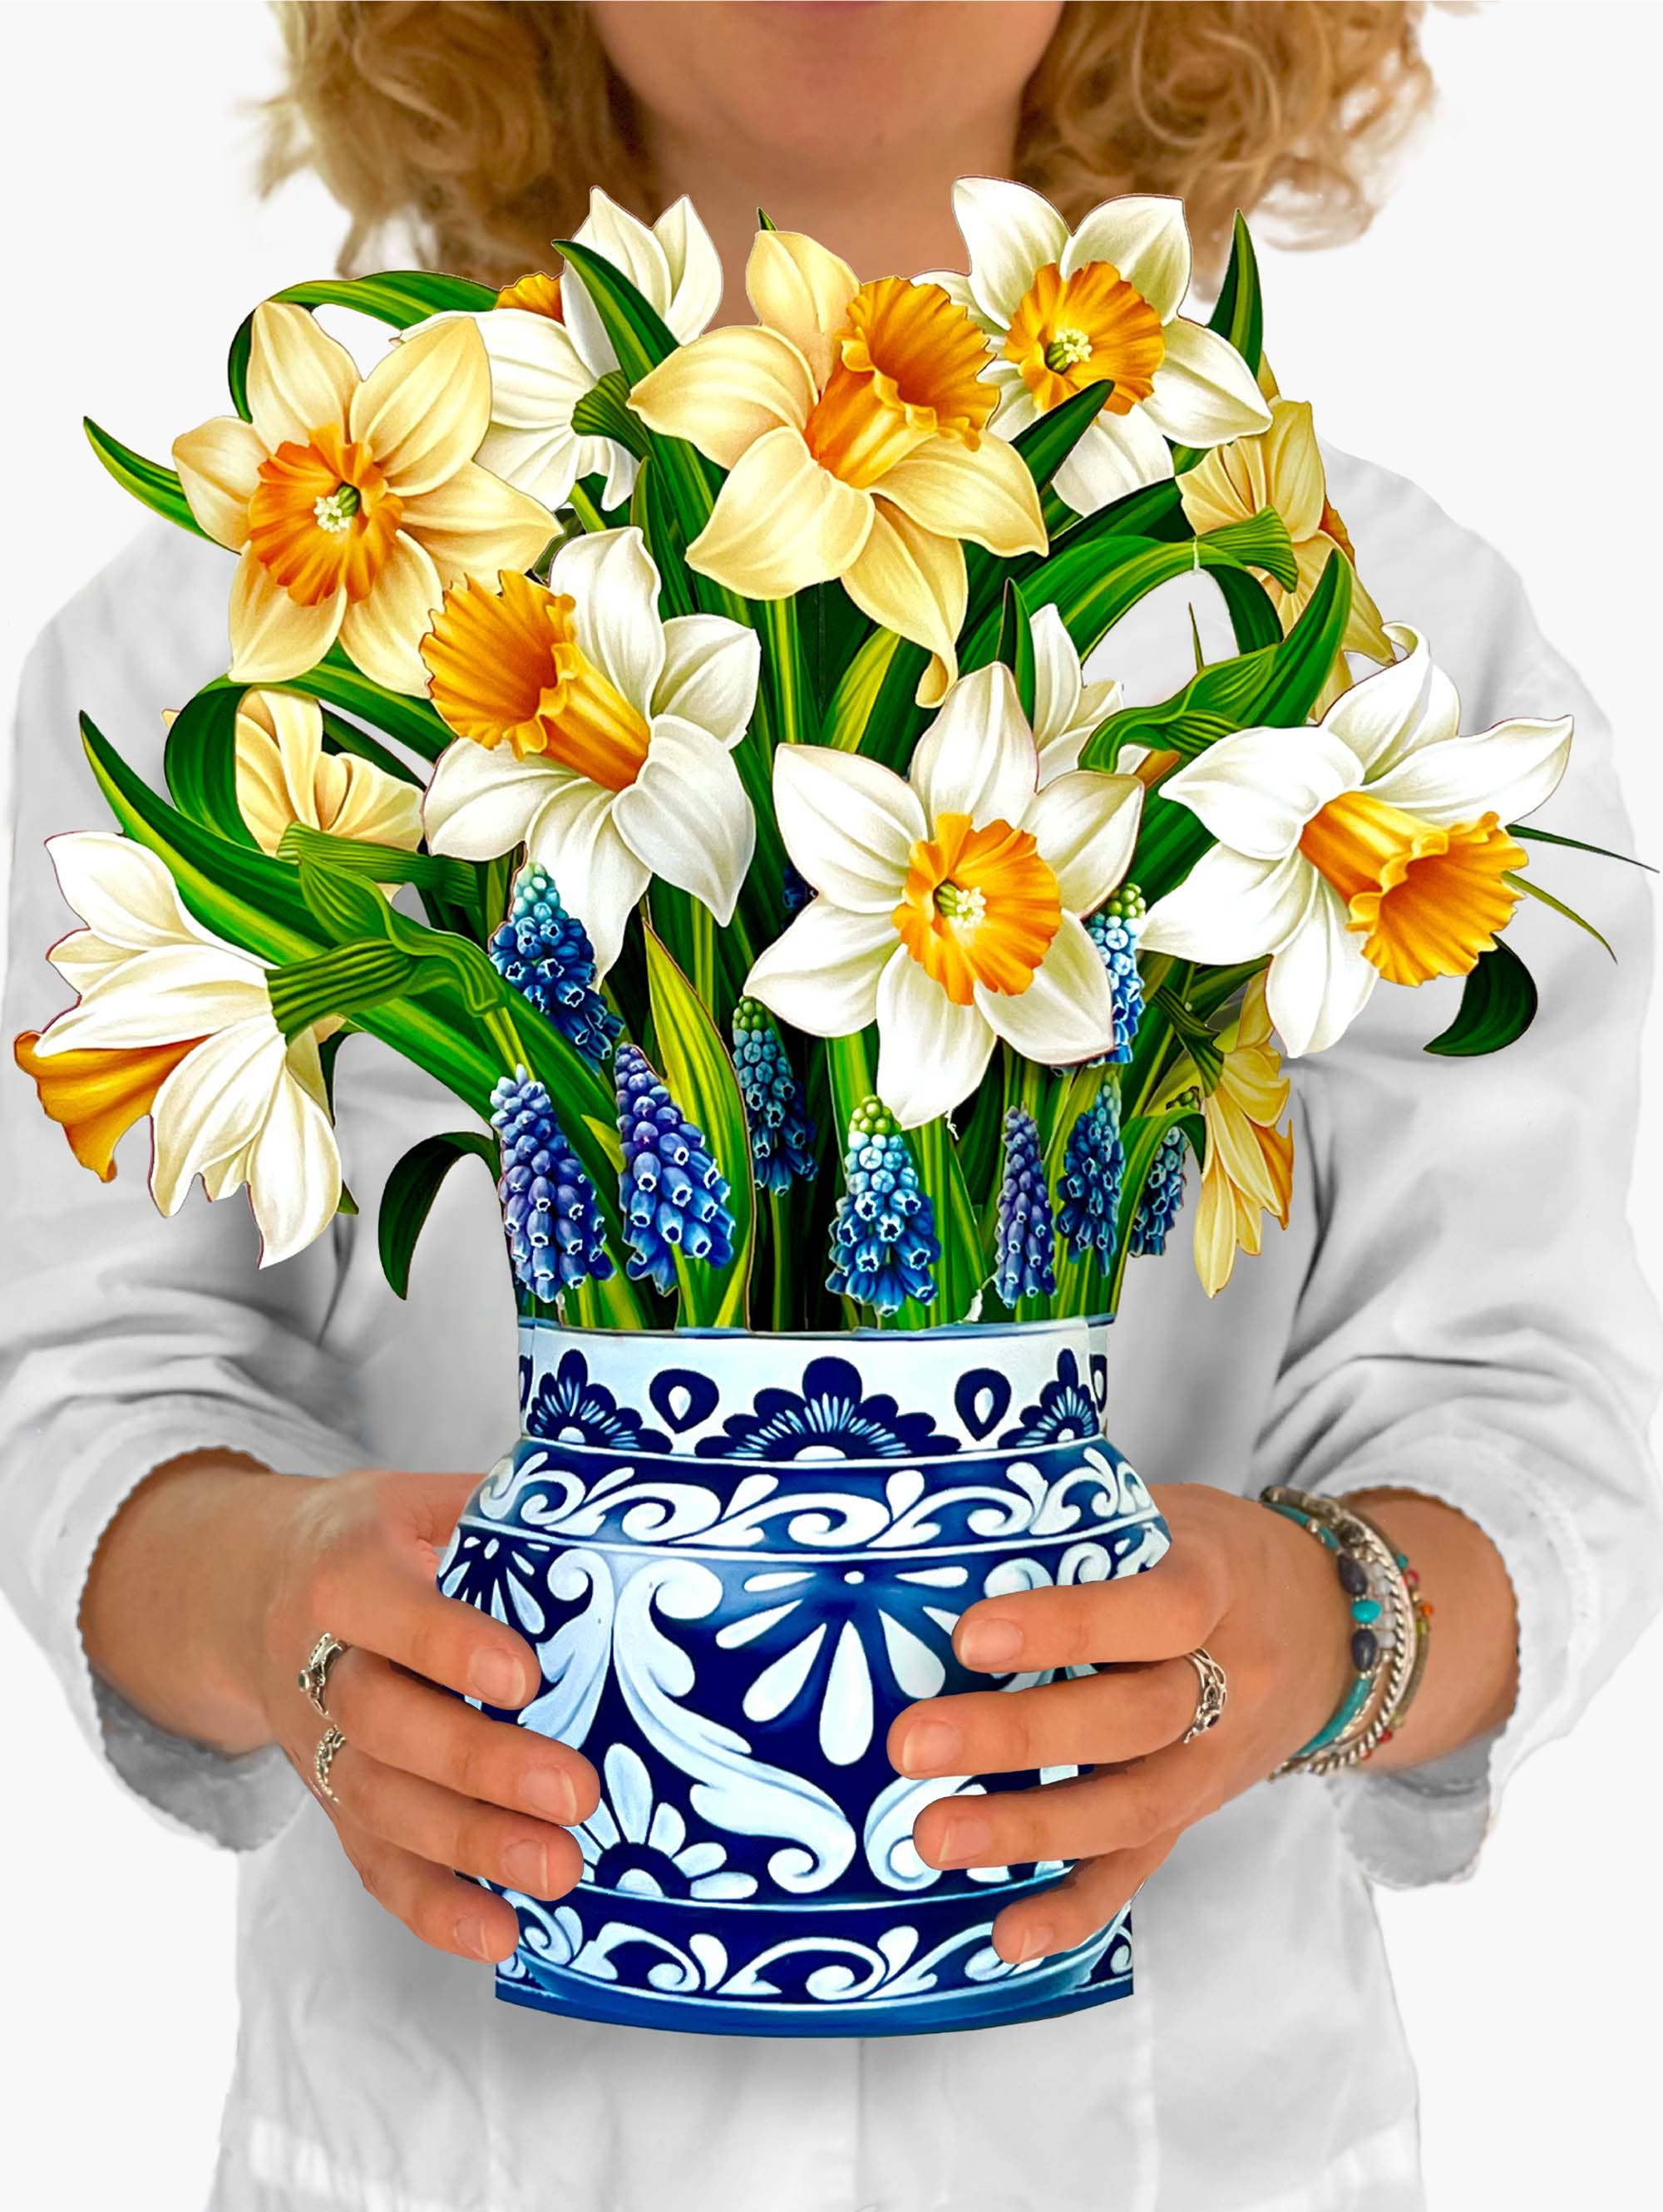 English Daffodils Pop Up Greeting Card